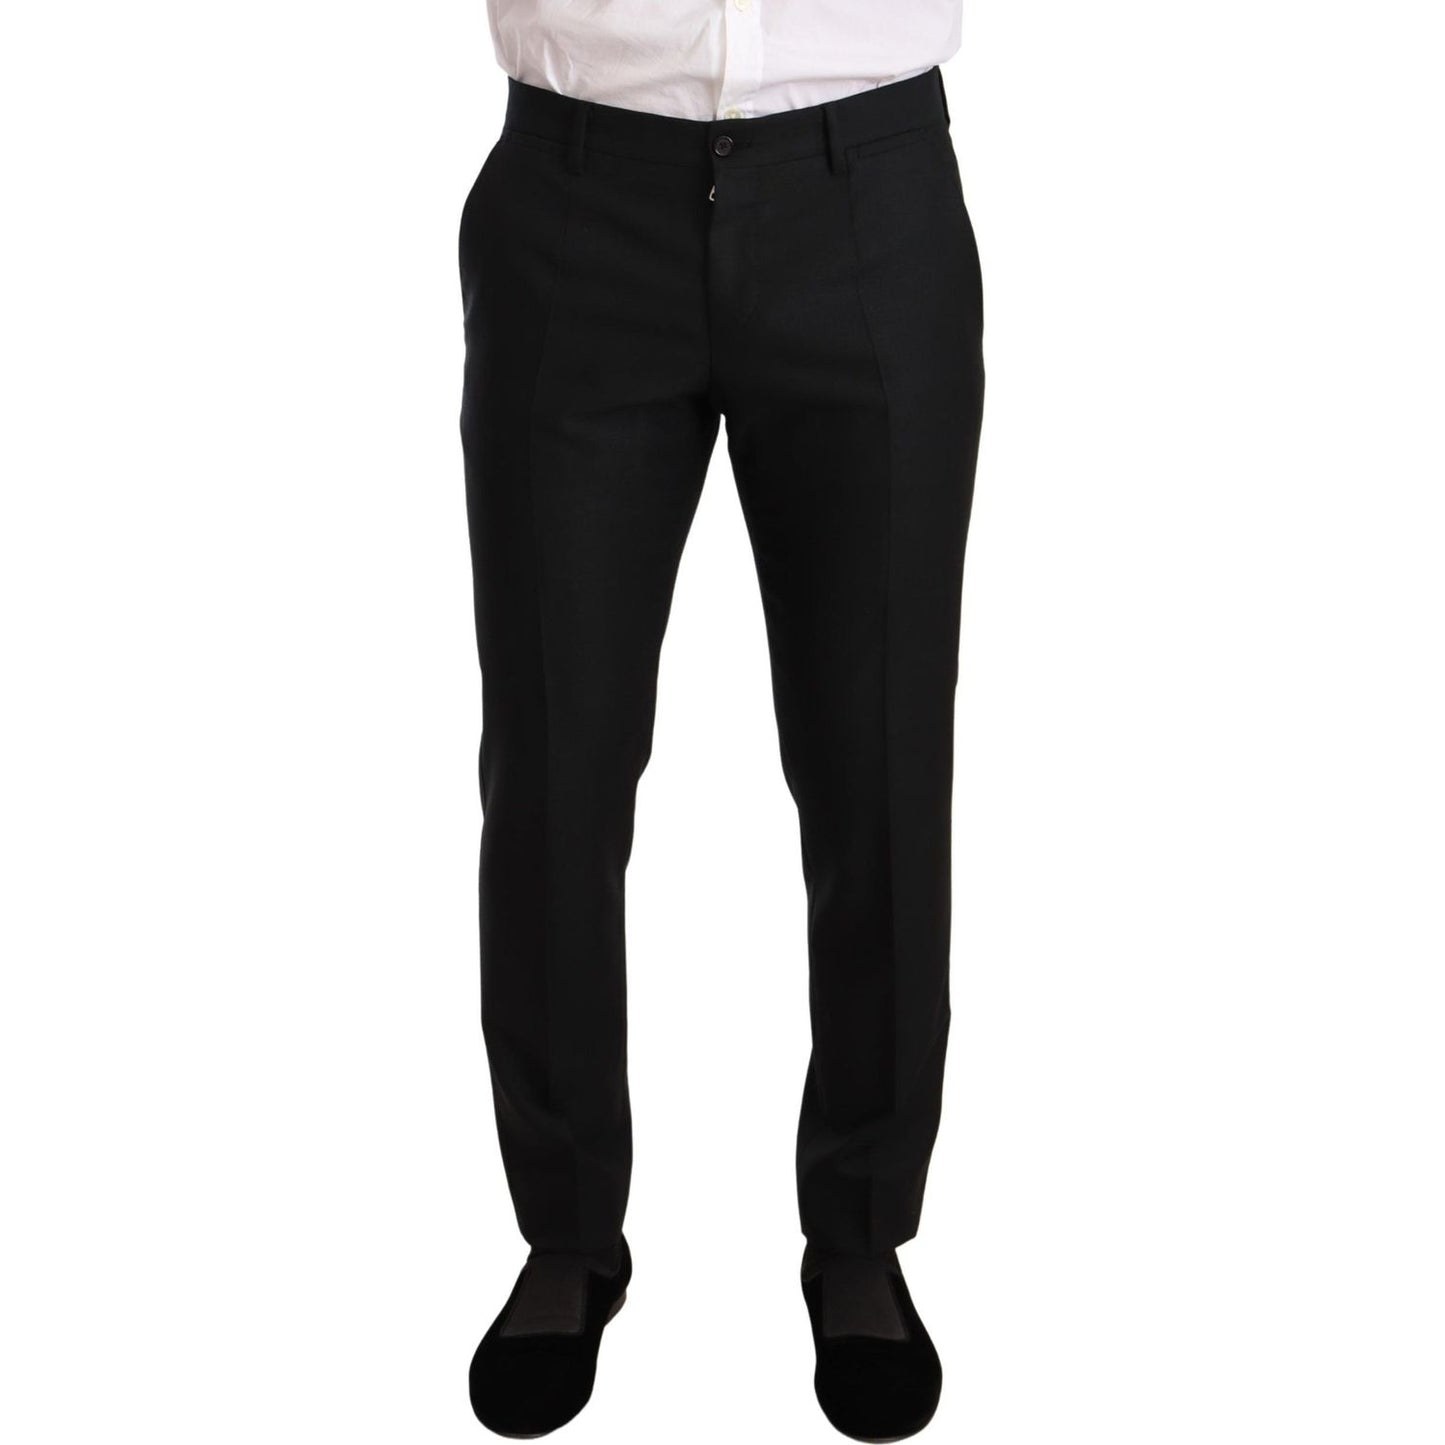 Dolce & Gabbana Sleek Black Virgin Wool Martini Suit black-wool-slim-2-piece-set-martini-suit